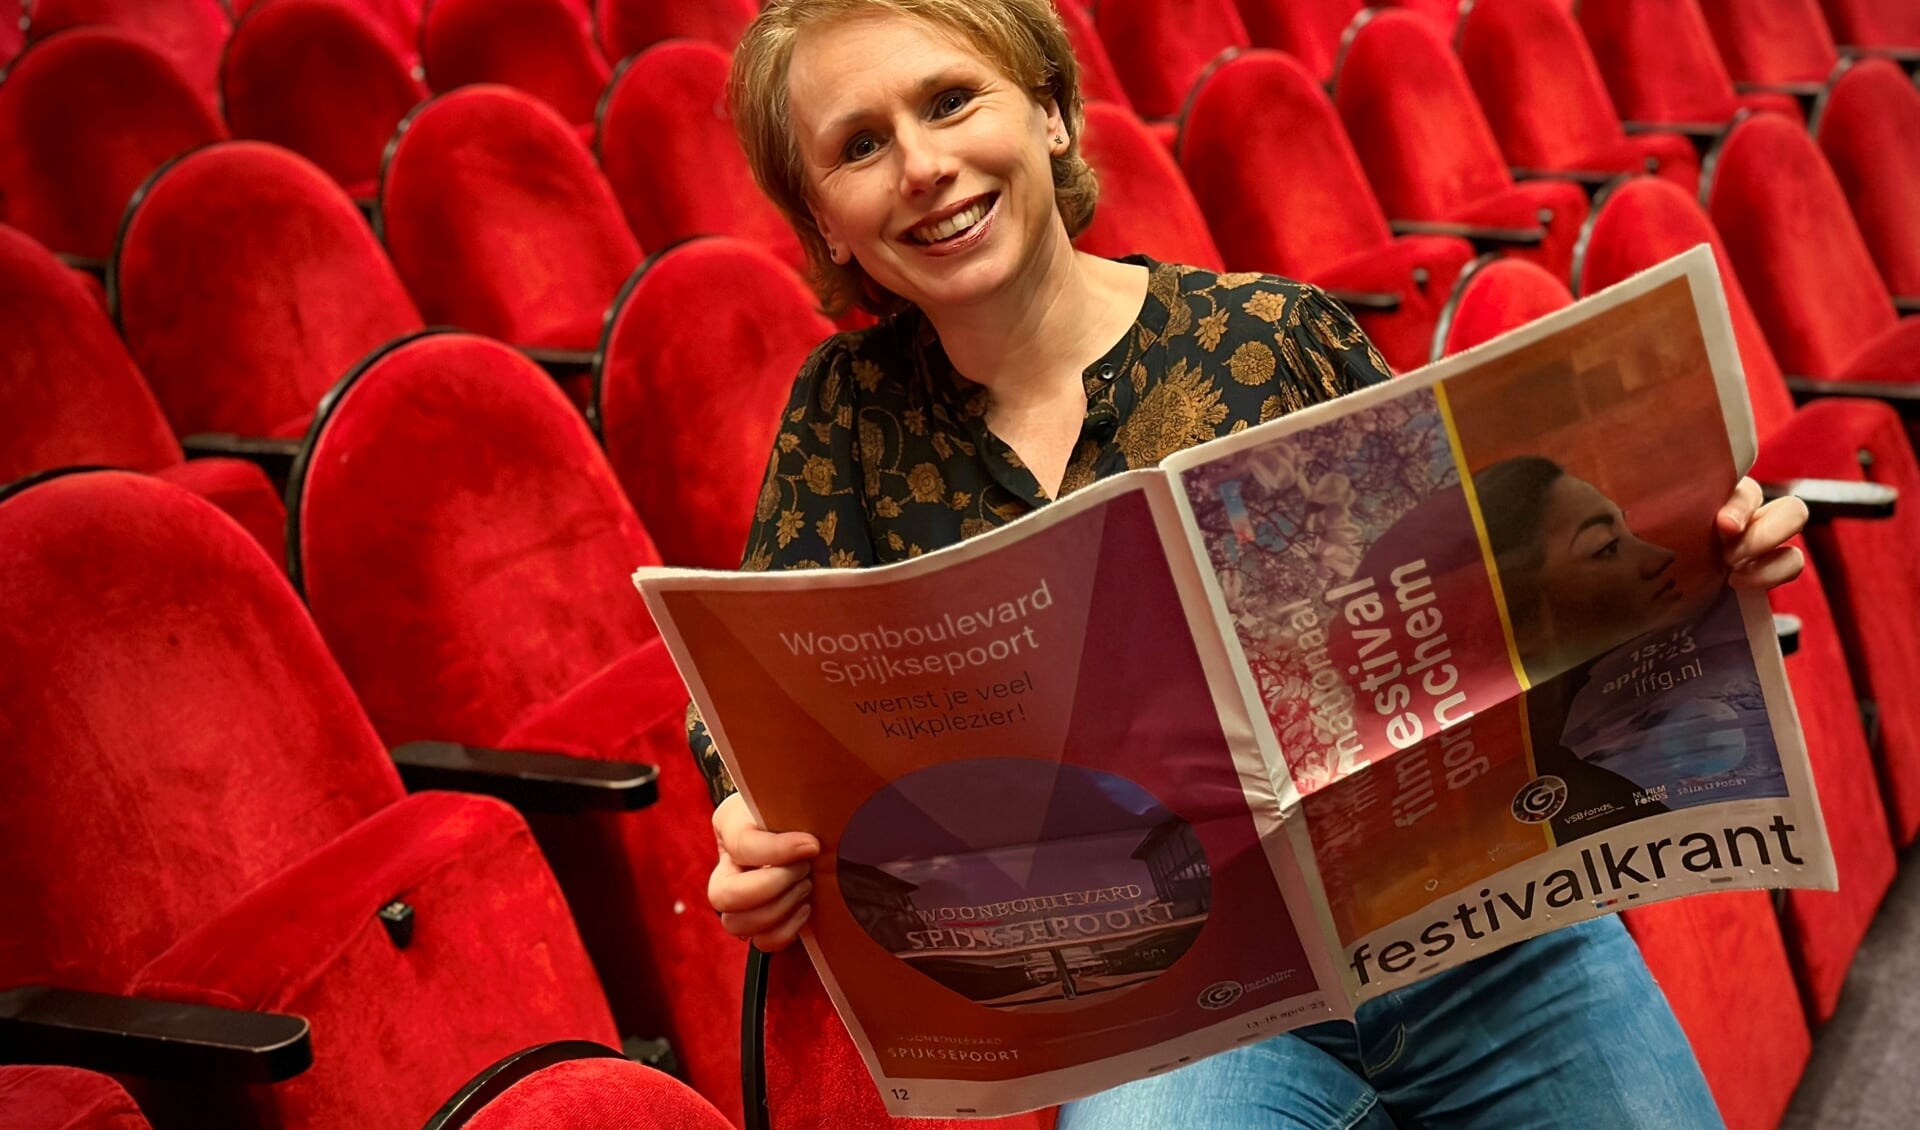 Festivaldirecteur Anika van der Kevie: